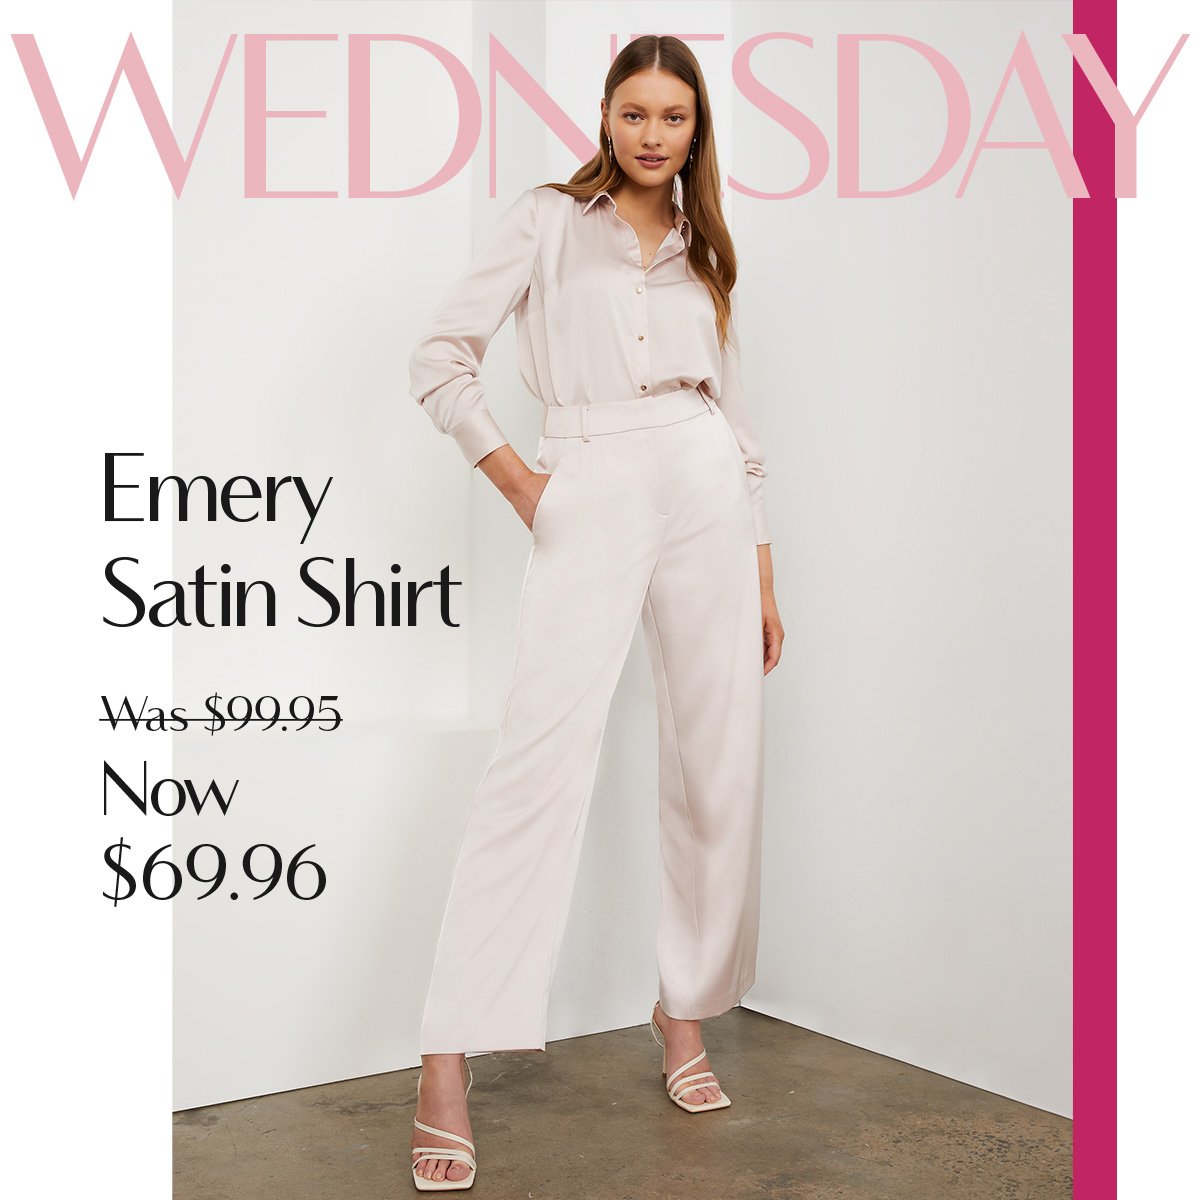 Wednesday - Emery Satin Shirt